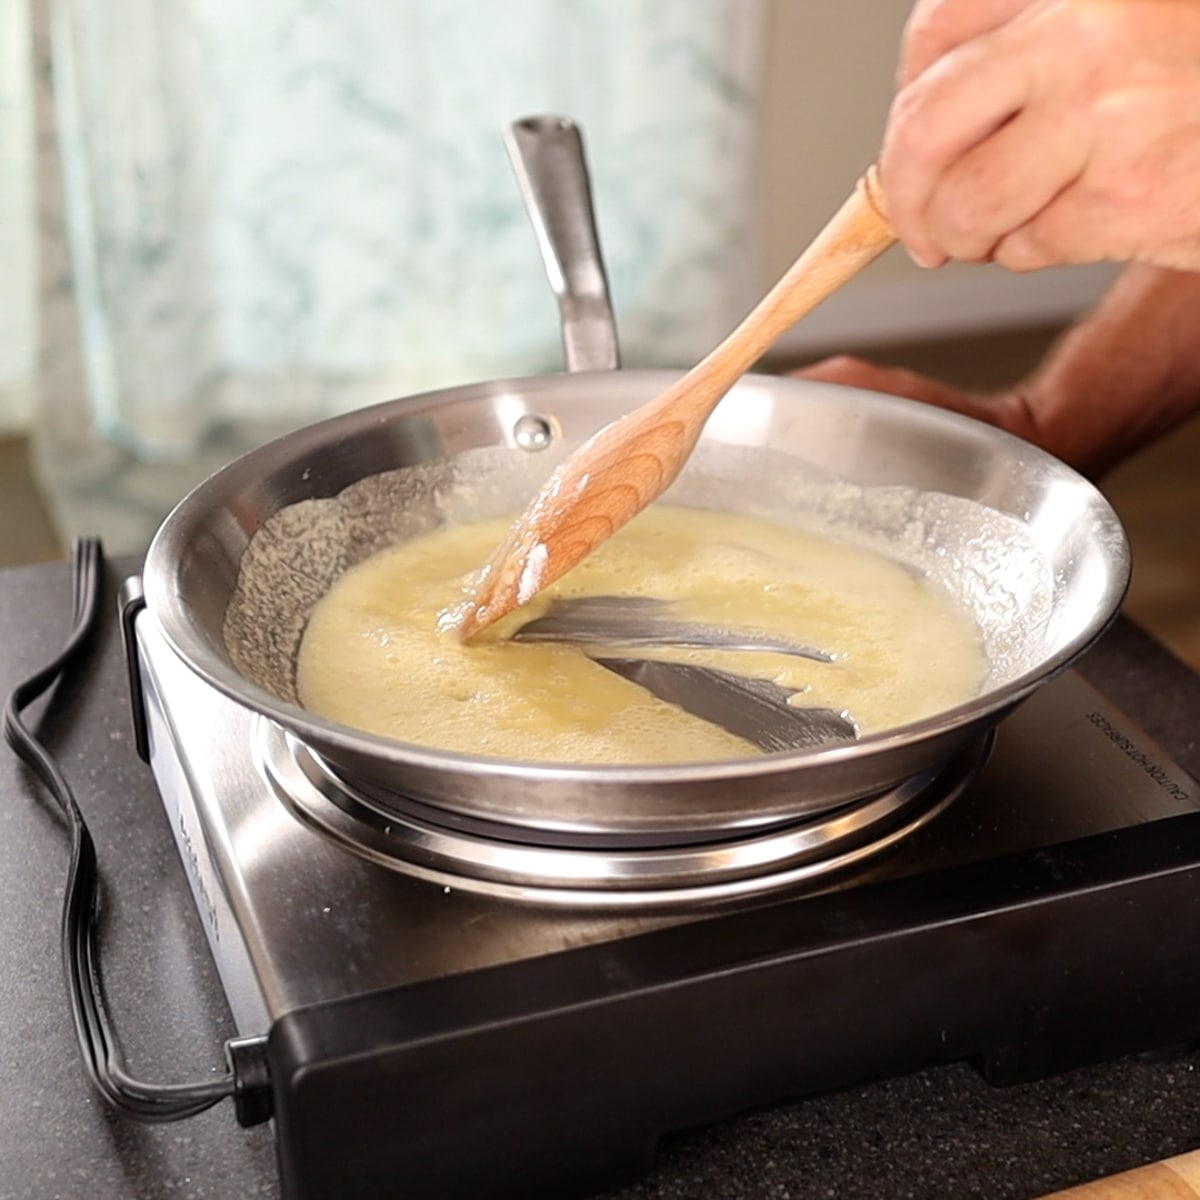 making a béchamel sauce in a frying pan